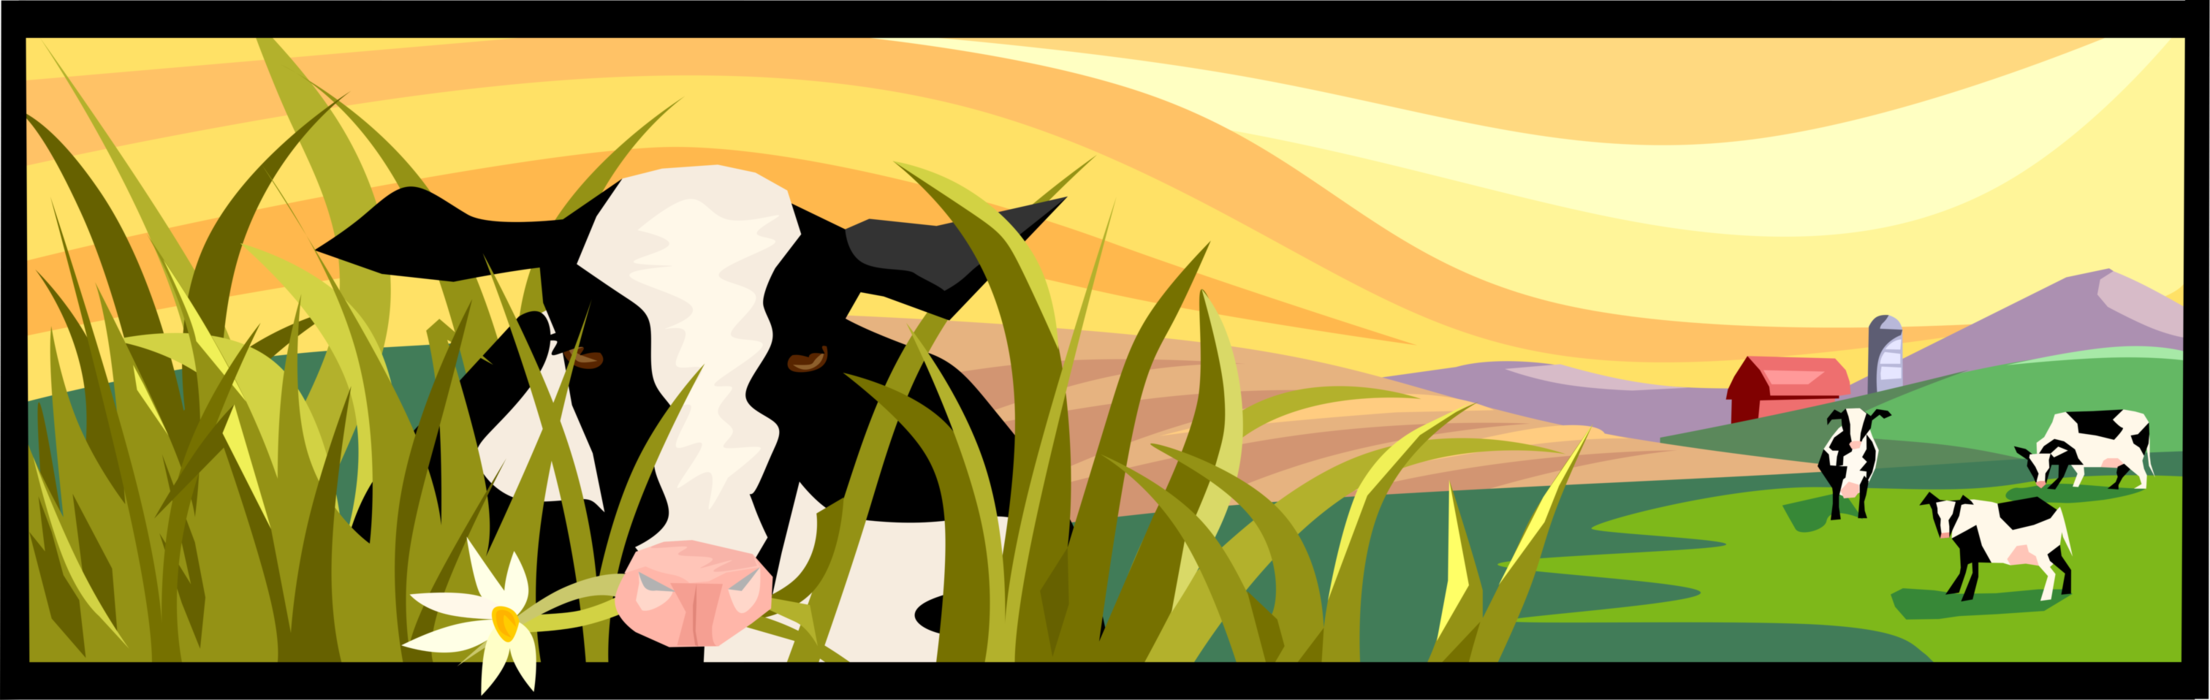 Vector Illustration of Domestic Farm Livestock Animal Cows Grazing in Field with Farm Barn